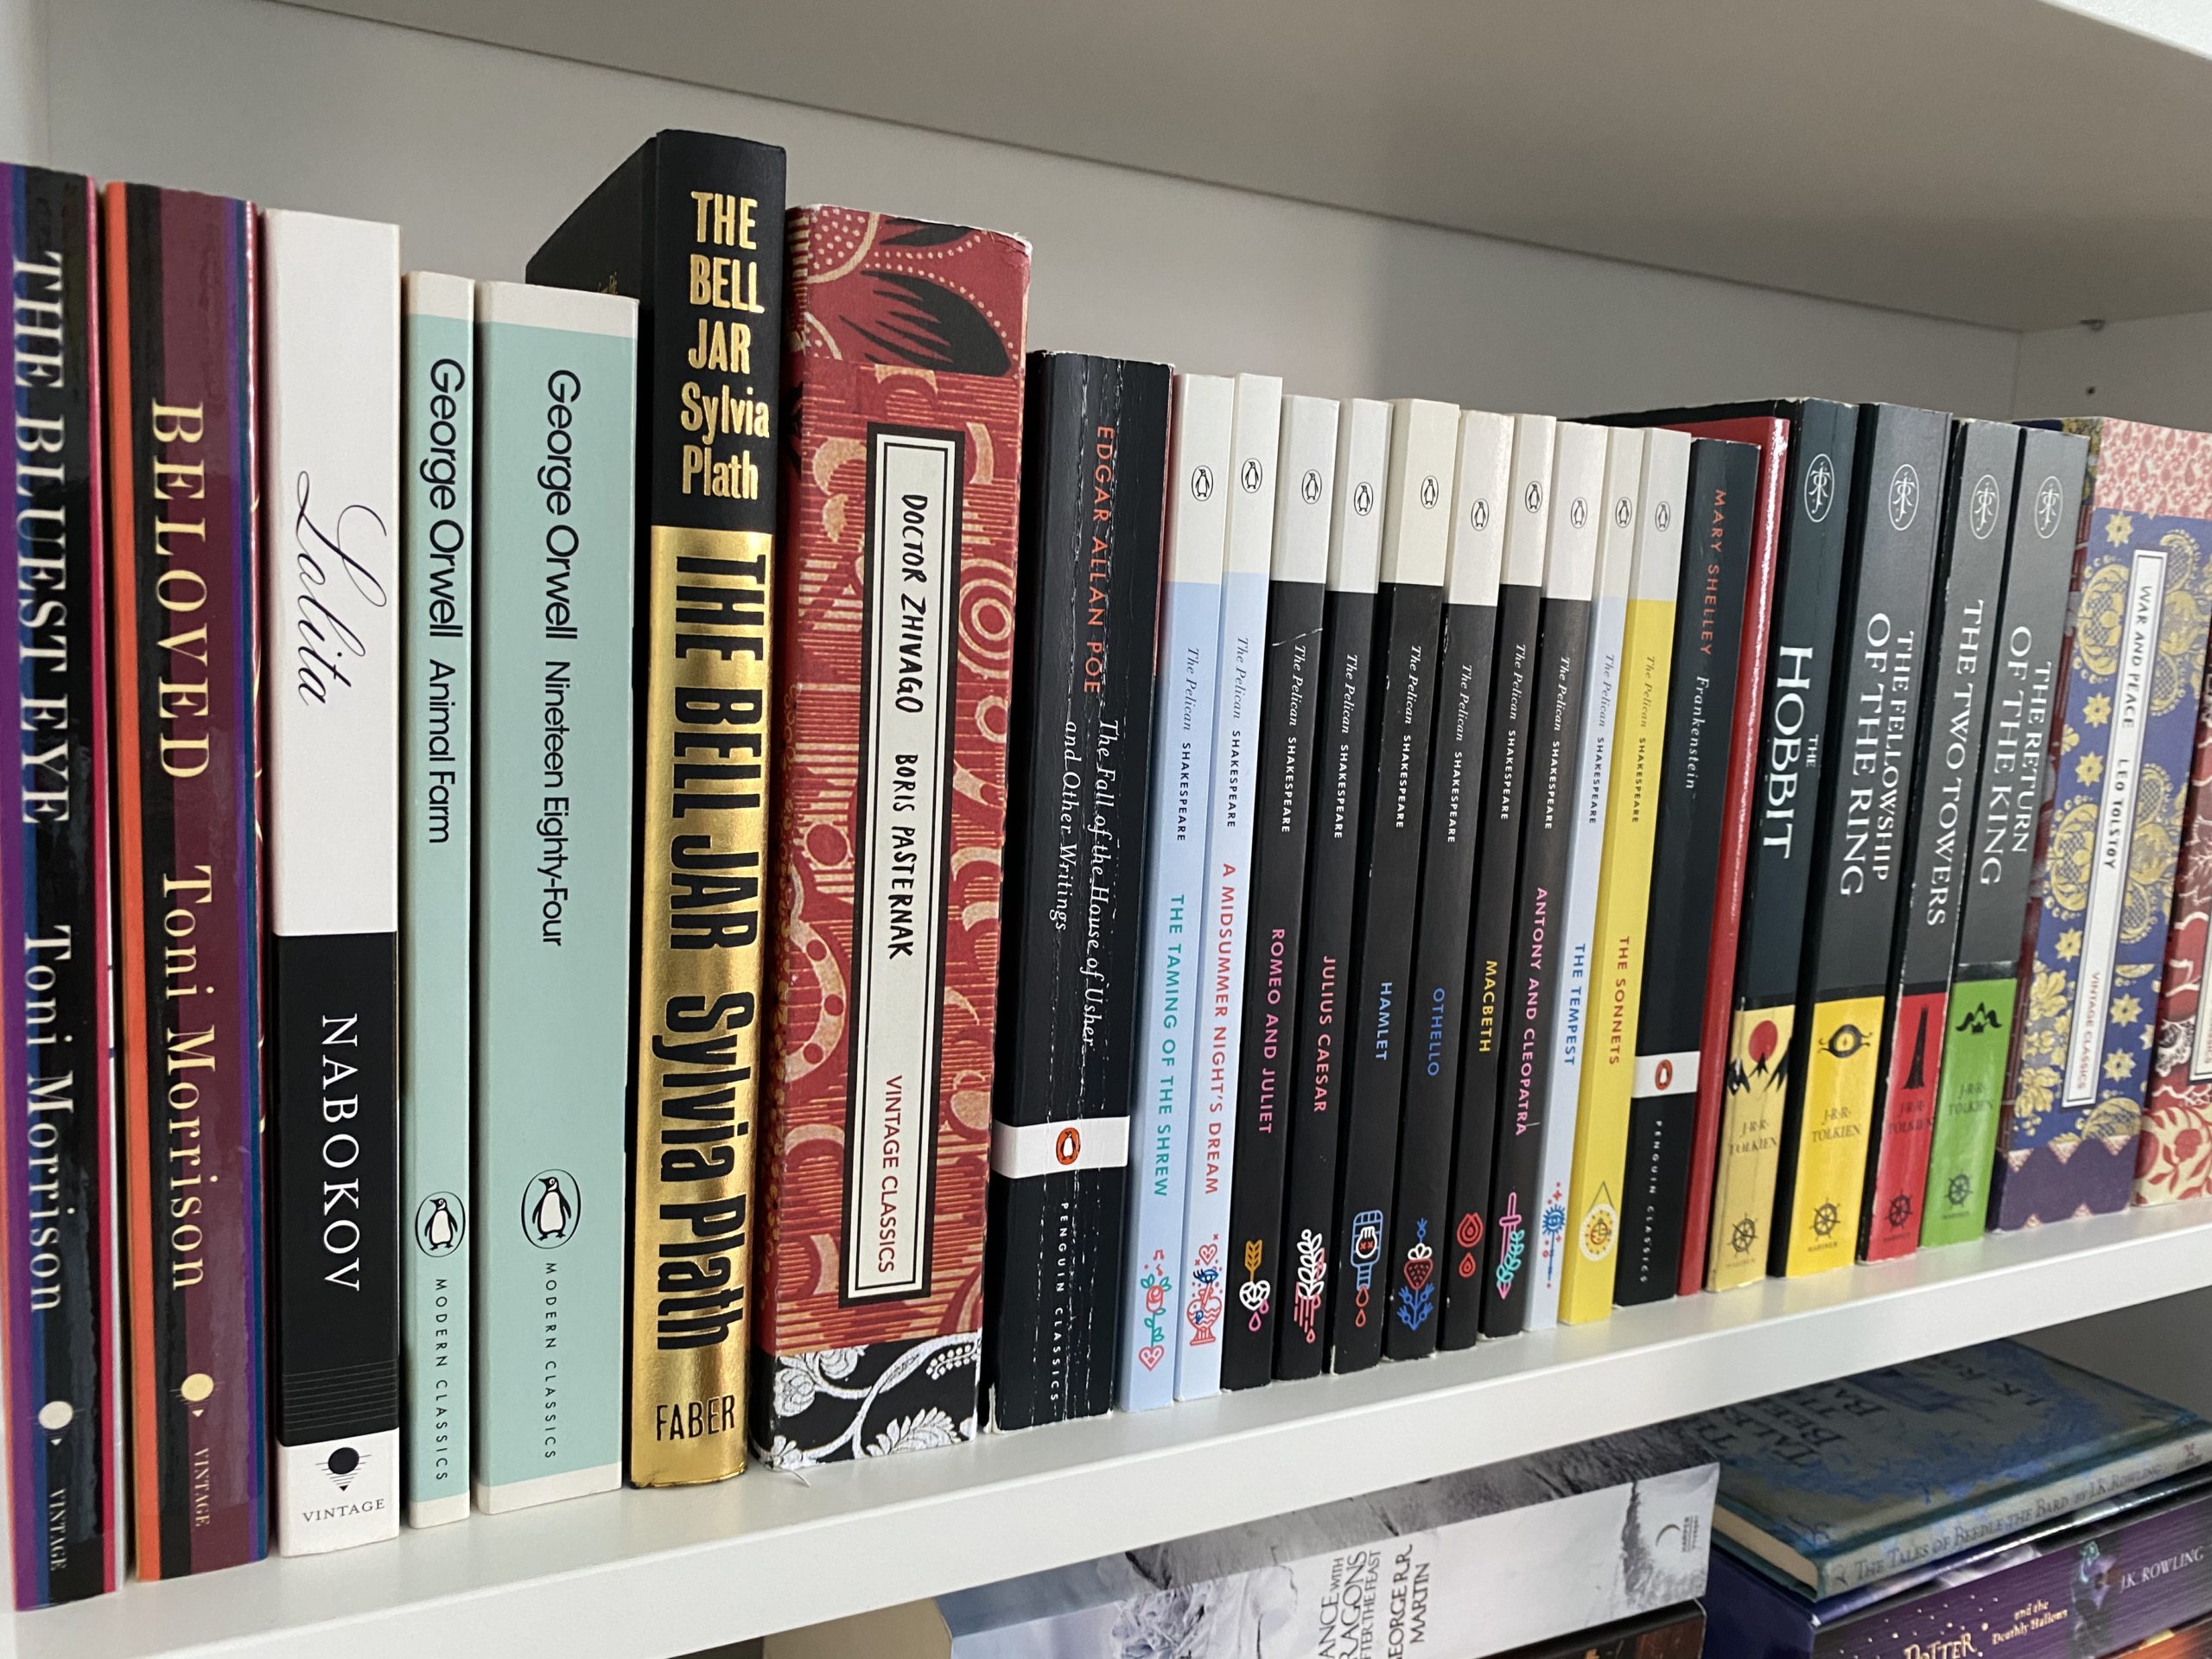 Bookshelf featuring classic and modern classic books